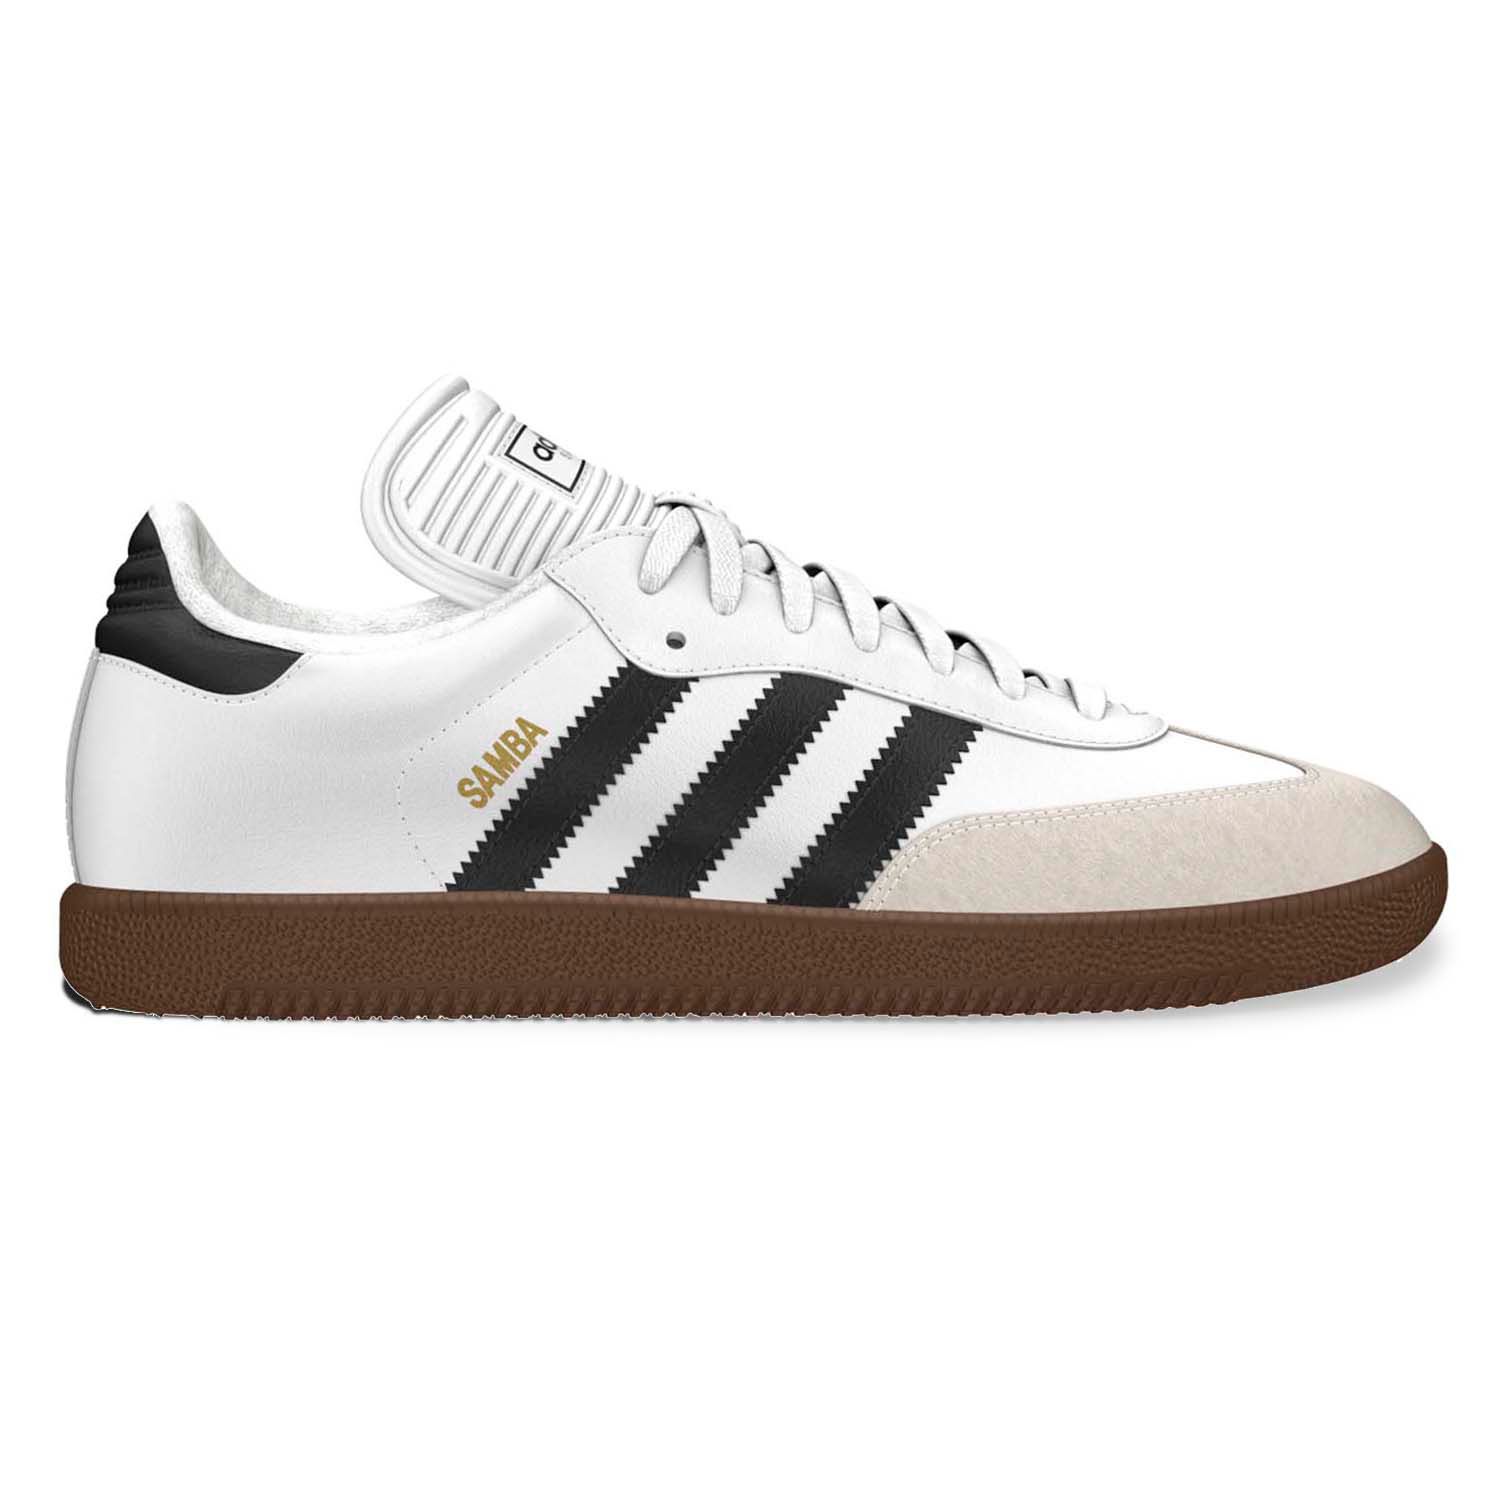 adidas Samba Indoor Soccer Shoes - Men